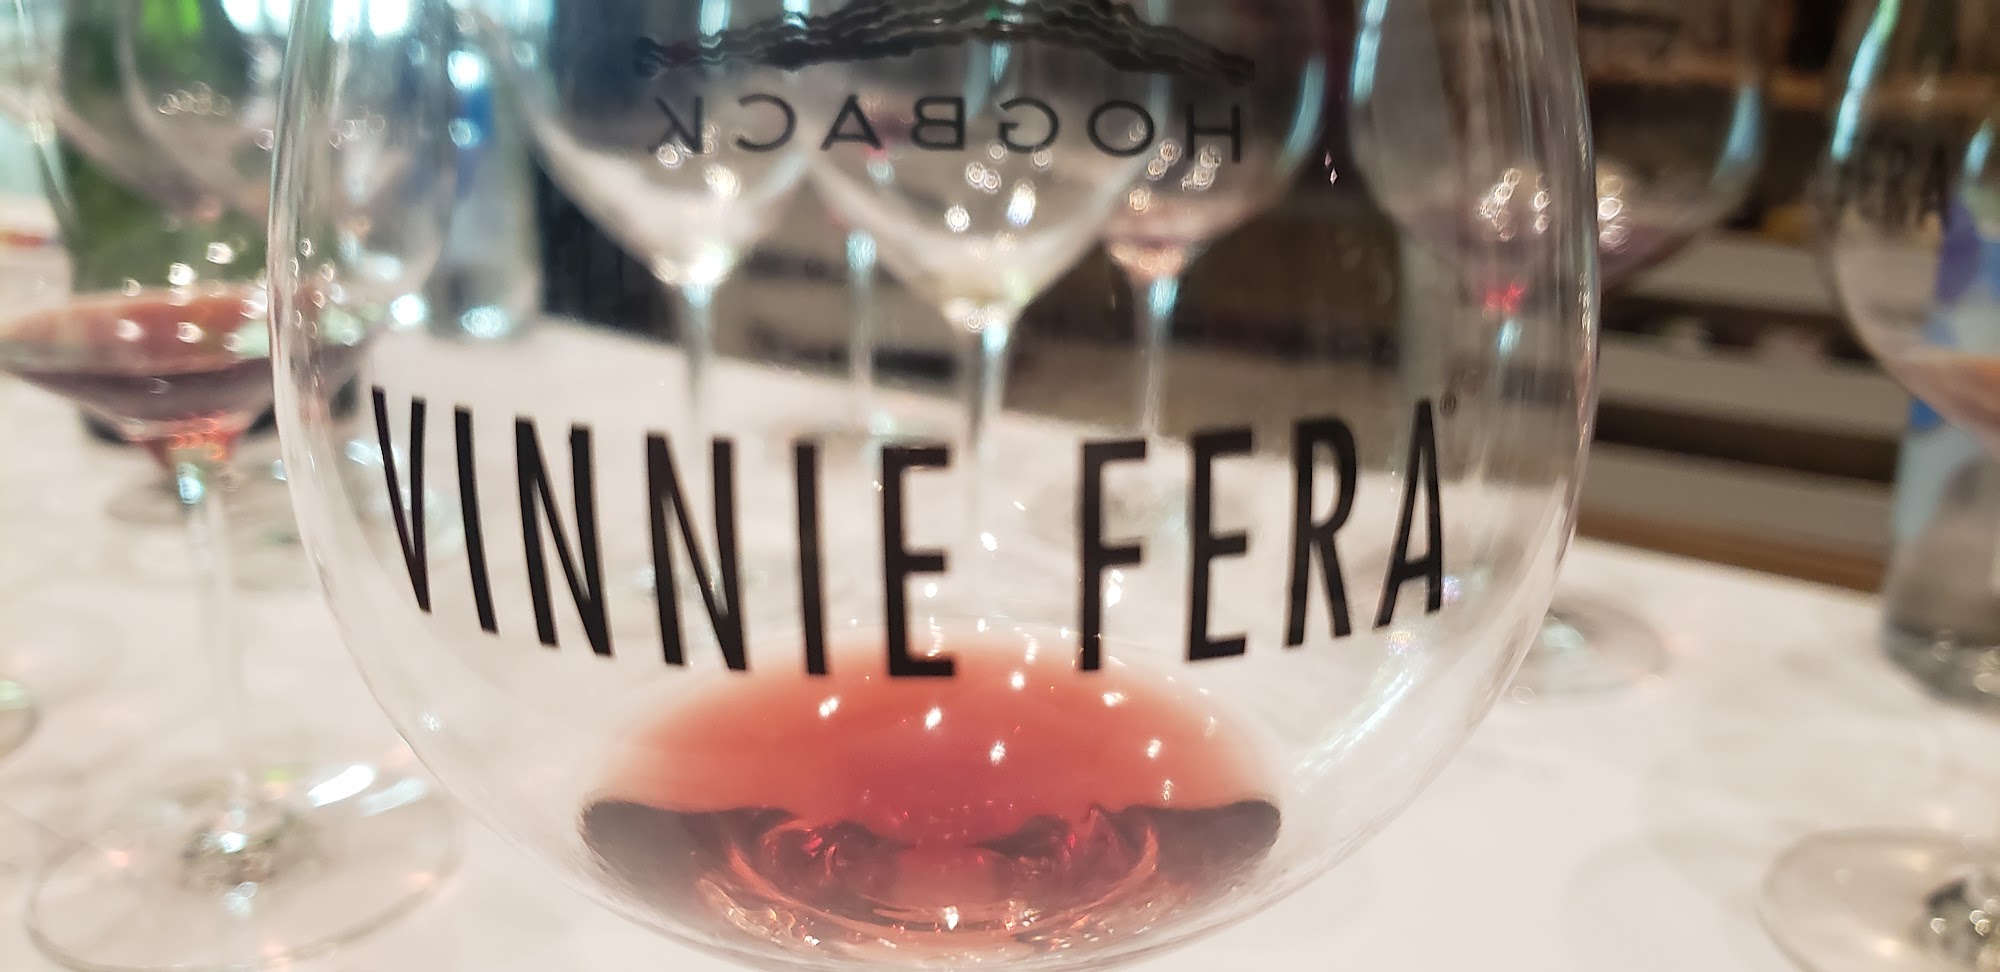 Vinnie Fera Winery